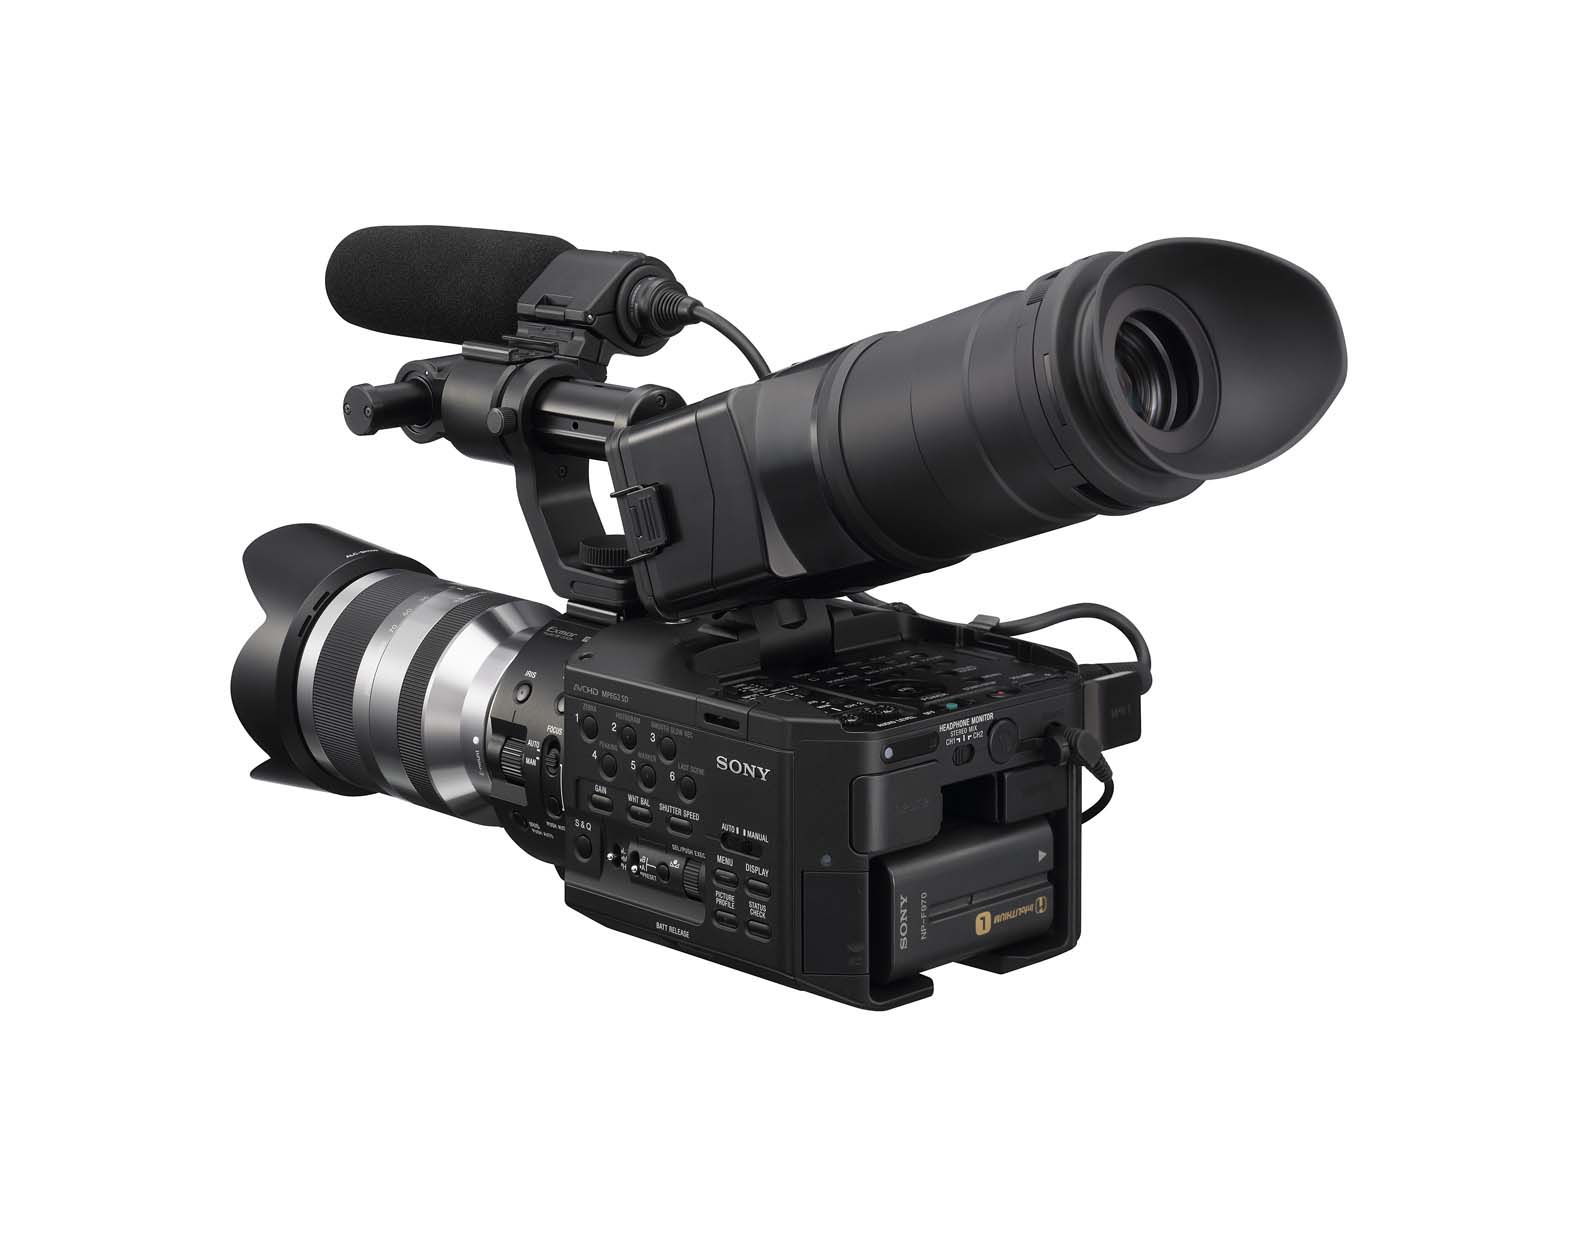 Sony NXCAM super 35mm video camera